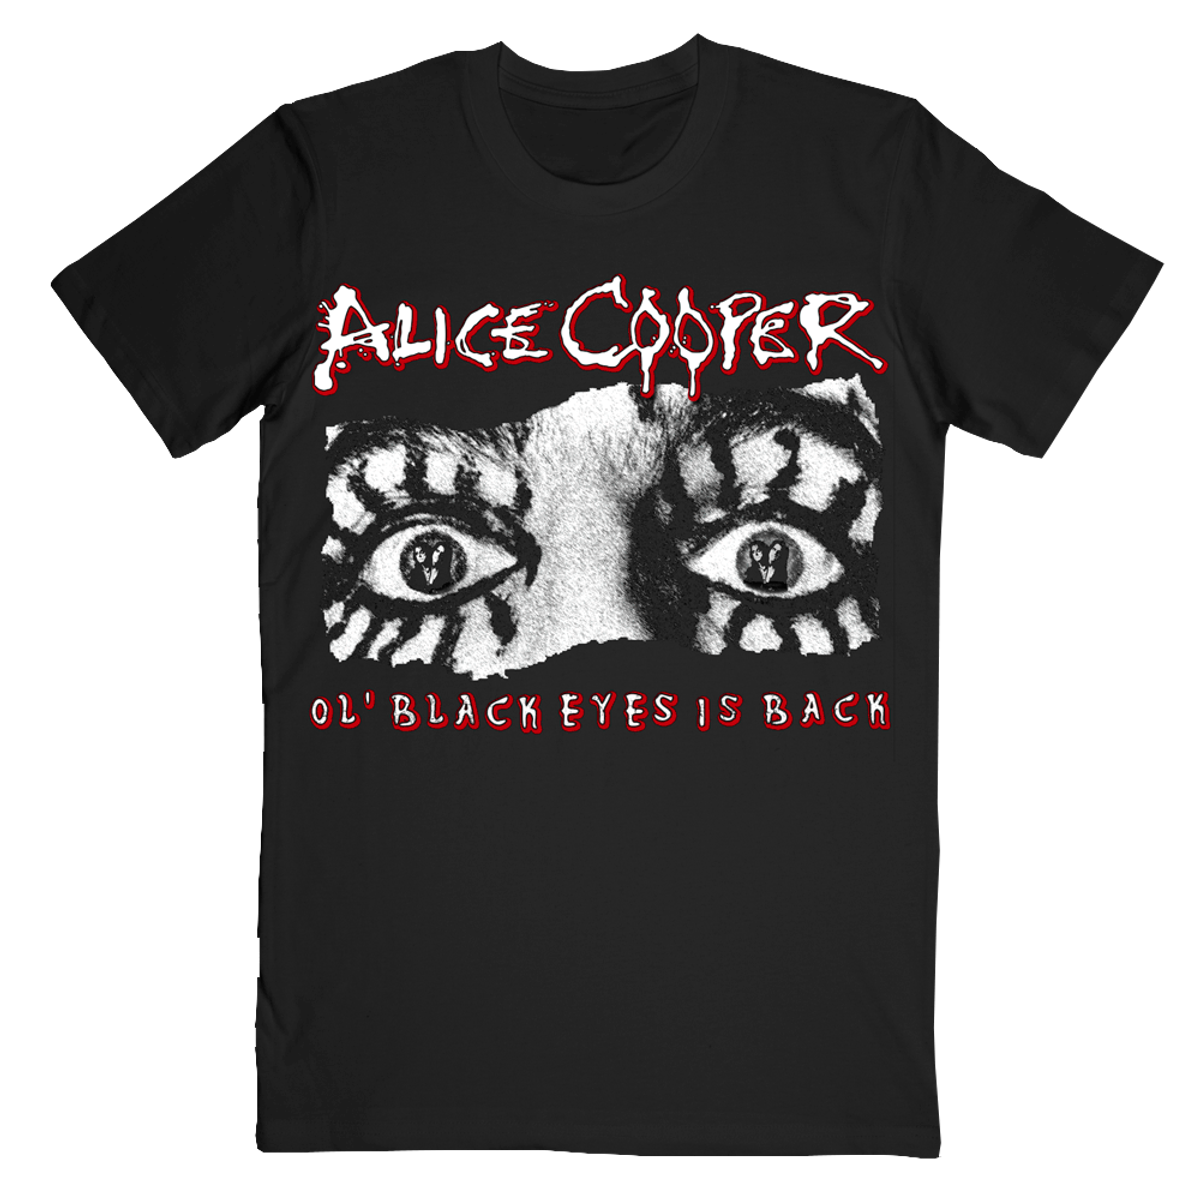 Alice Cooper reparte niños muertos - Página 20 Ol-black-eyes-is-back-tee?u=aHR0cHM6Ly9tdXNpY2dsdWUtdXNlci1hcHAtcC00LXAuczMuYW1hem9uYXdzLmNvbS9vcmlnaW5hbHMvMzQ5YThkMTctNjI0Ny00ZDA3LWI2NzktN2RlZGNmNzVjMmI5&width=1200&mode=contain